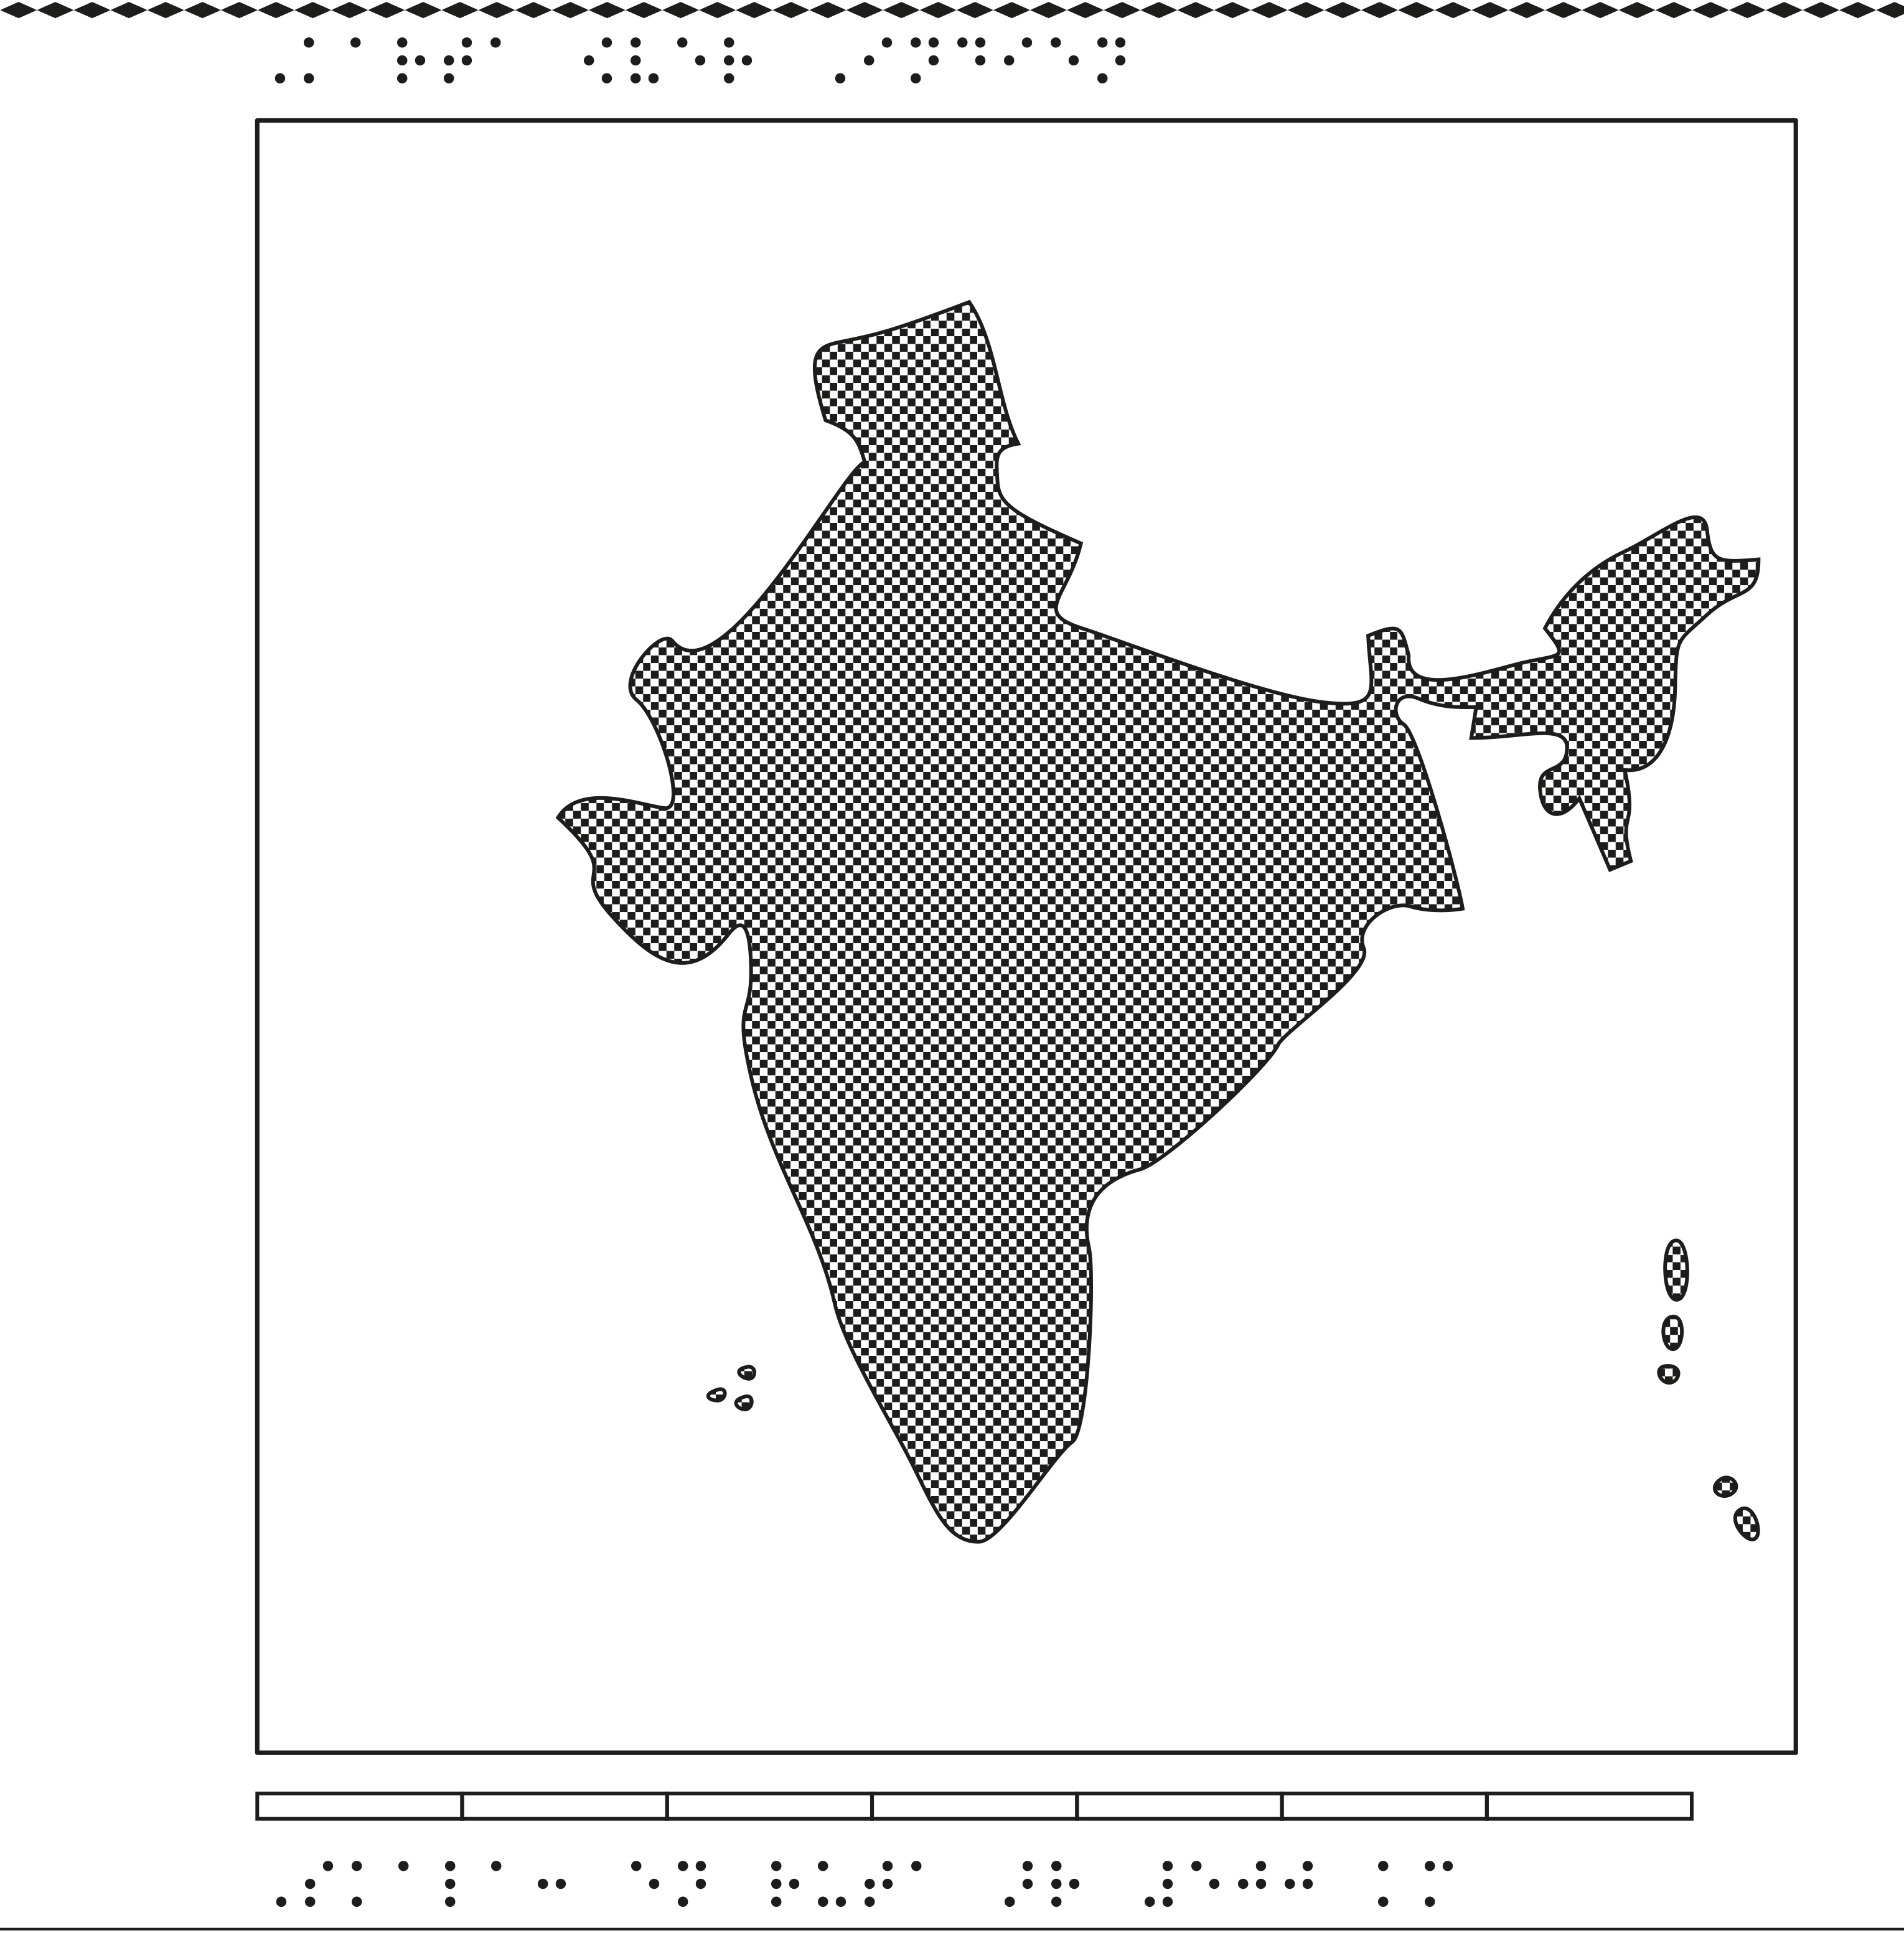 Relief karta över Indien.